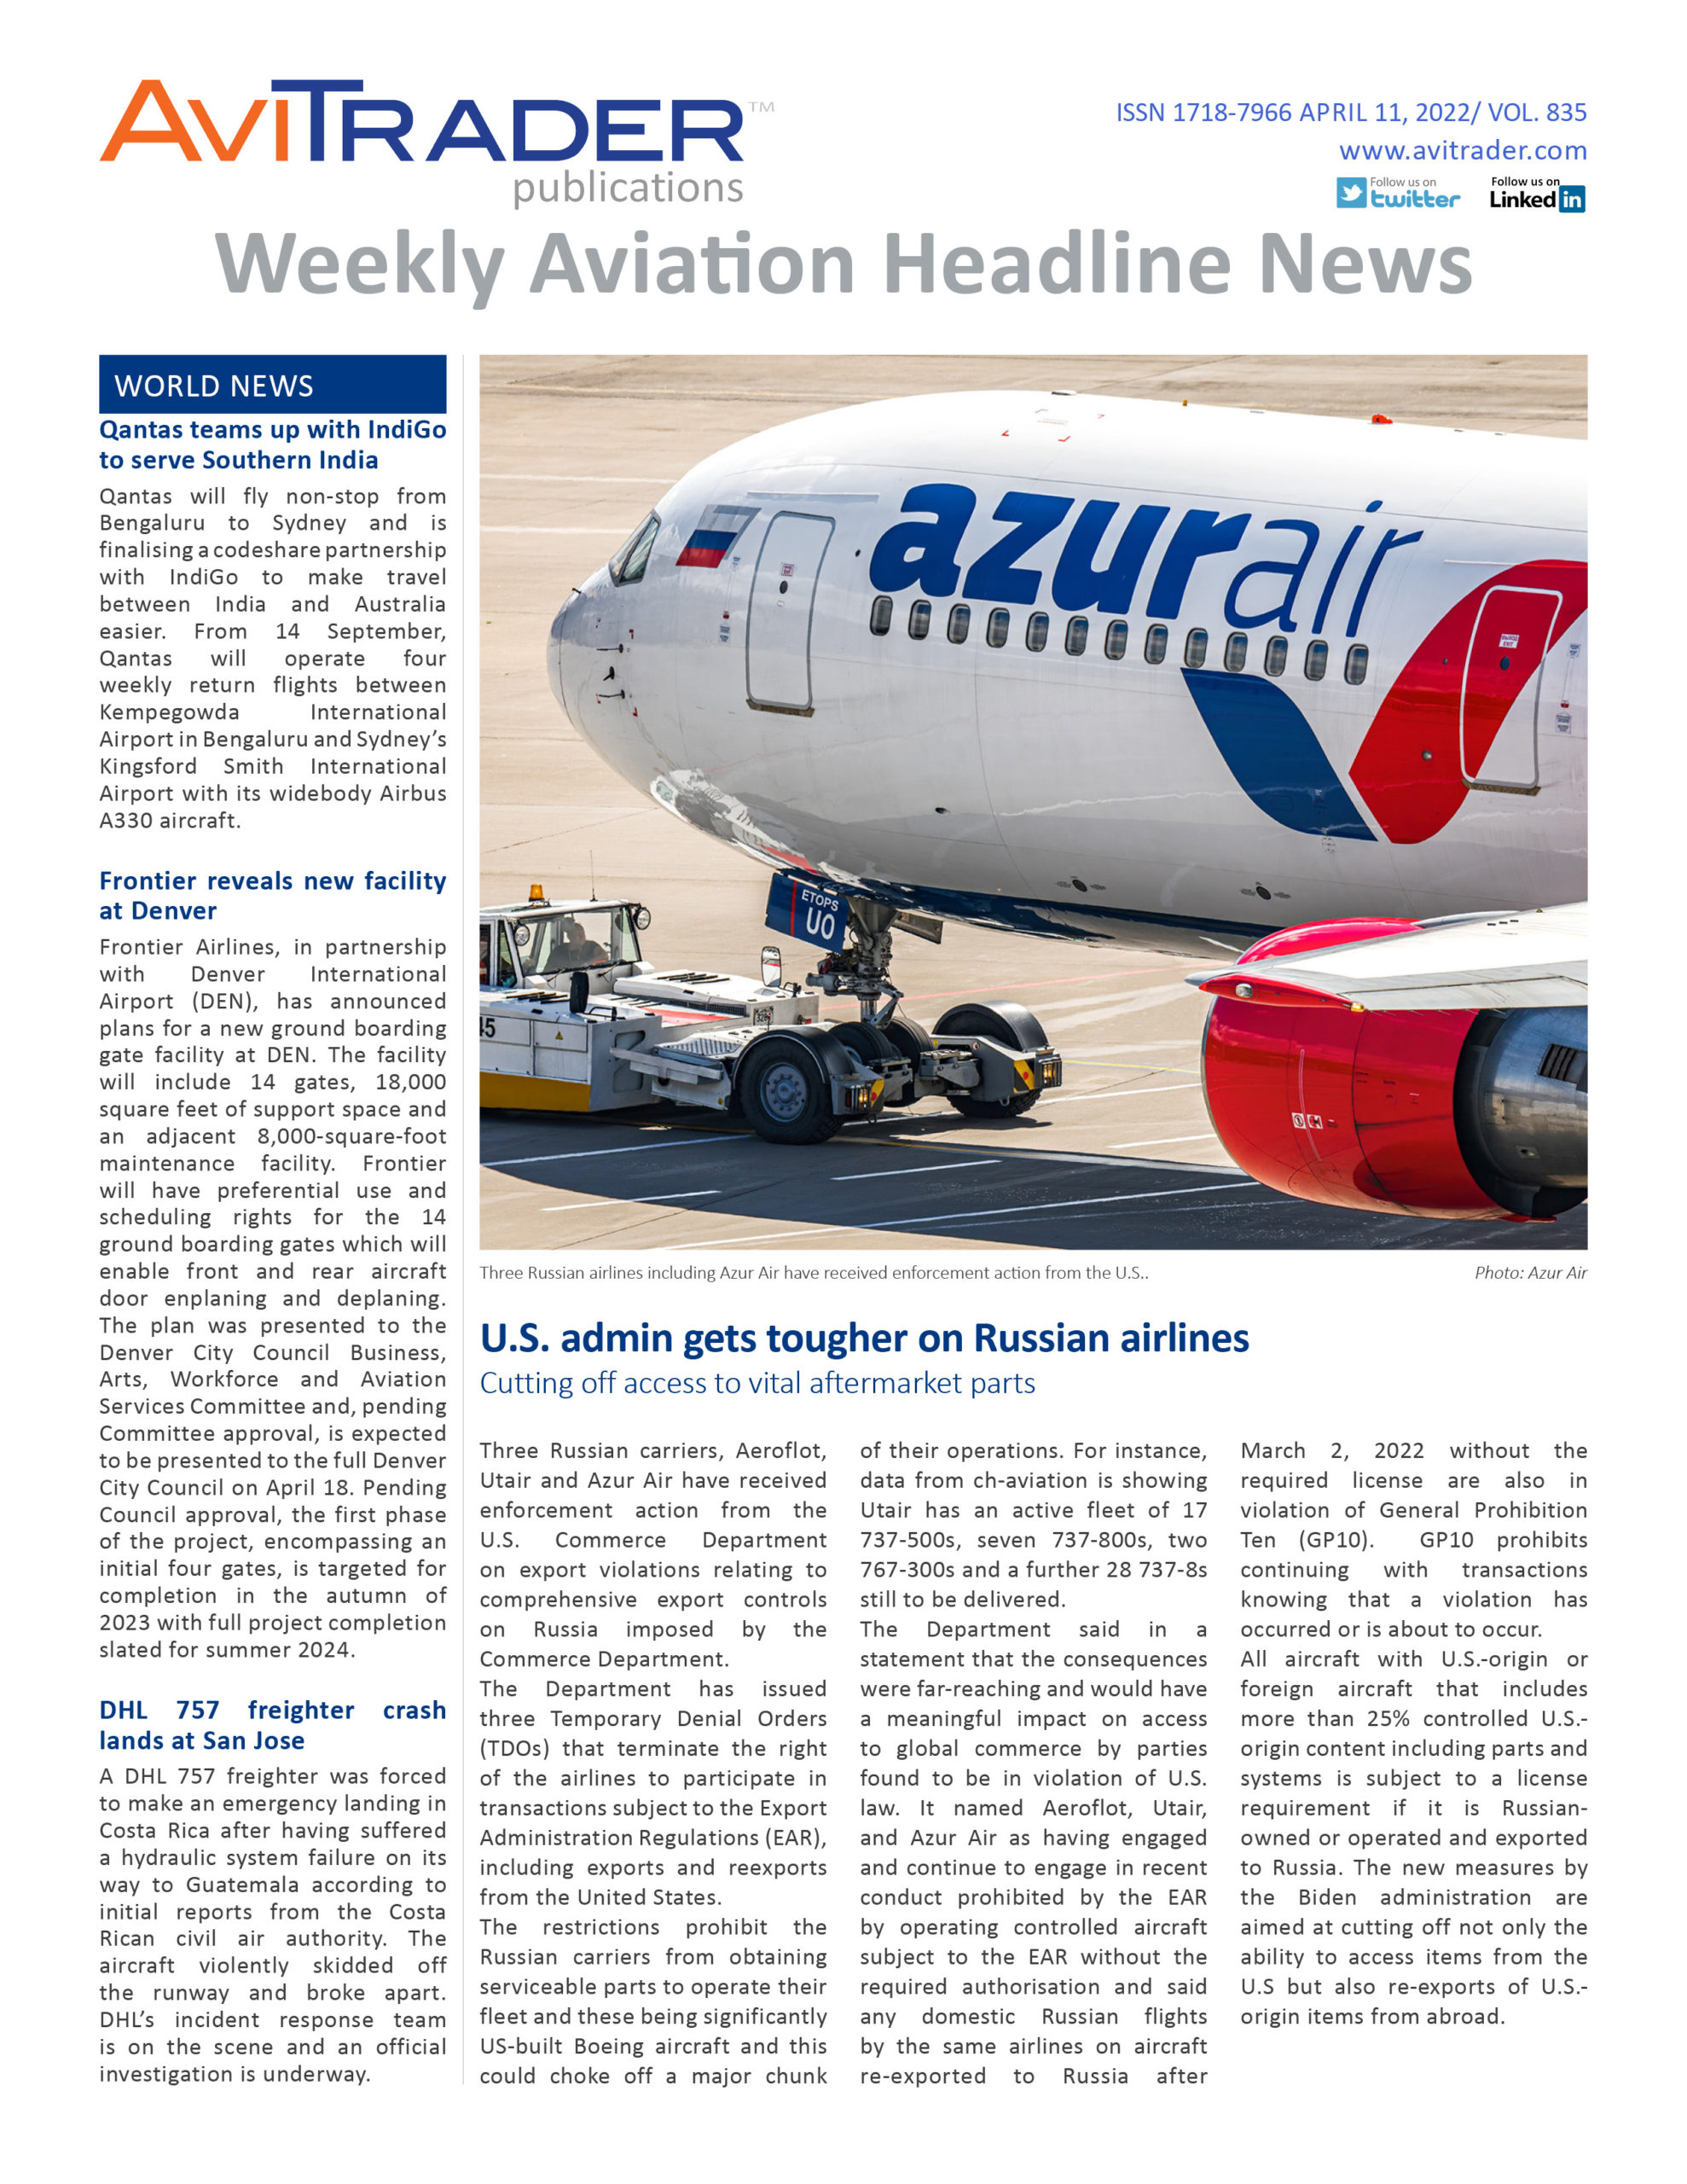 AviTrader_Weekly_Headline_News_Cover_2022-04-11